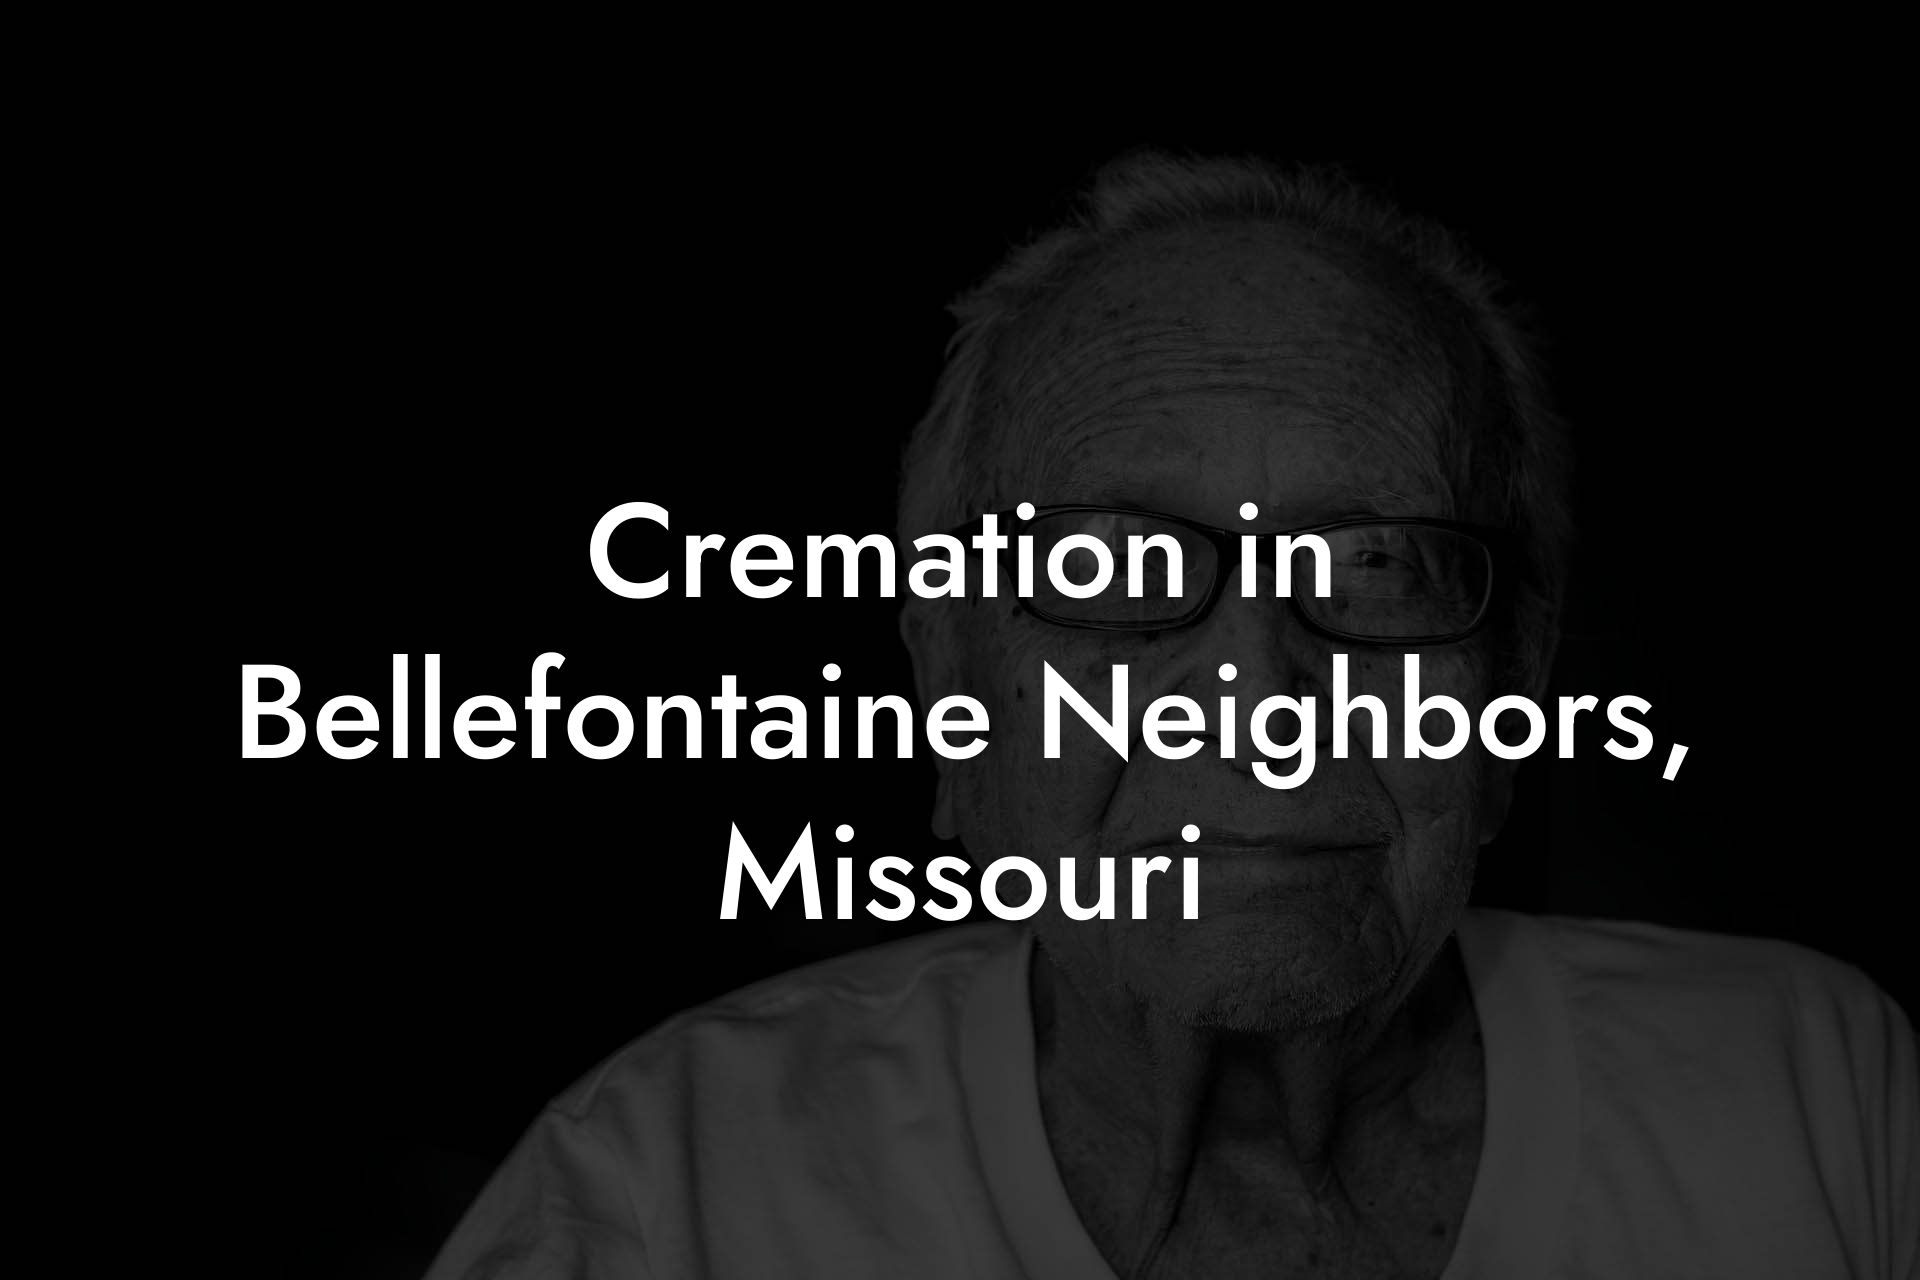 Cremation in Bellefontaine Neighbors, Missouri